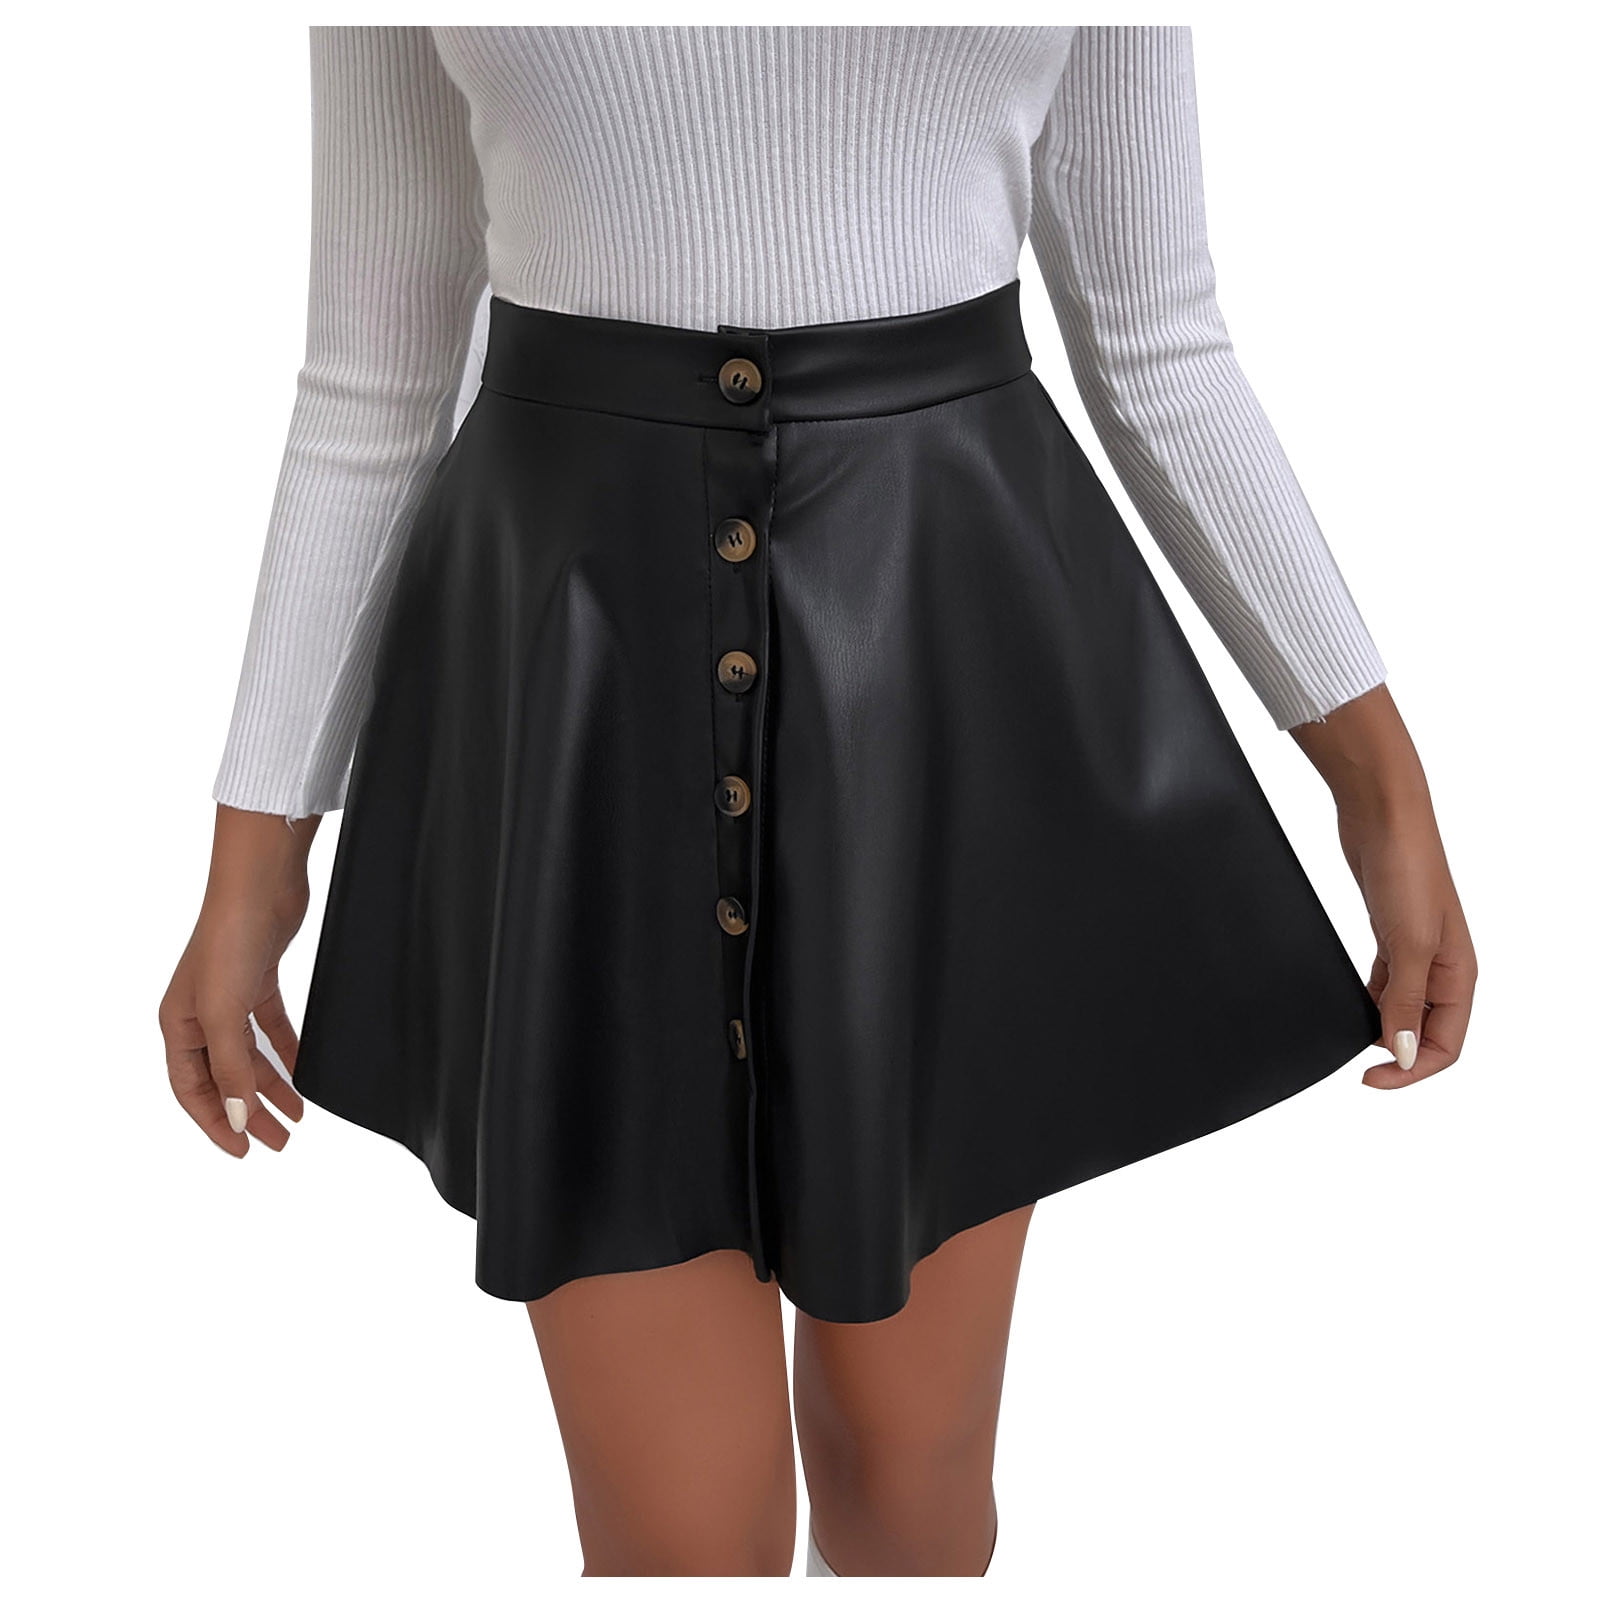 Generic Women's Basic Skirt Versatile Stretchy Flared Casual Mini Skater- Black @ Best Price Online | Jumia Egypt